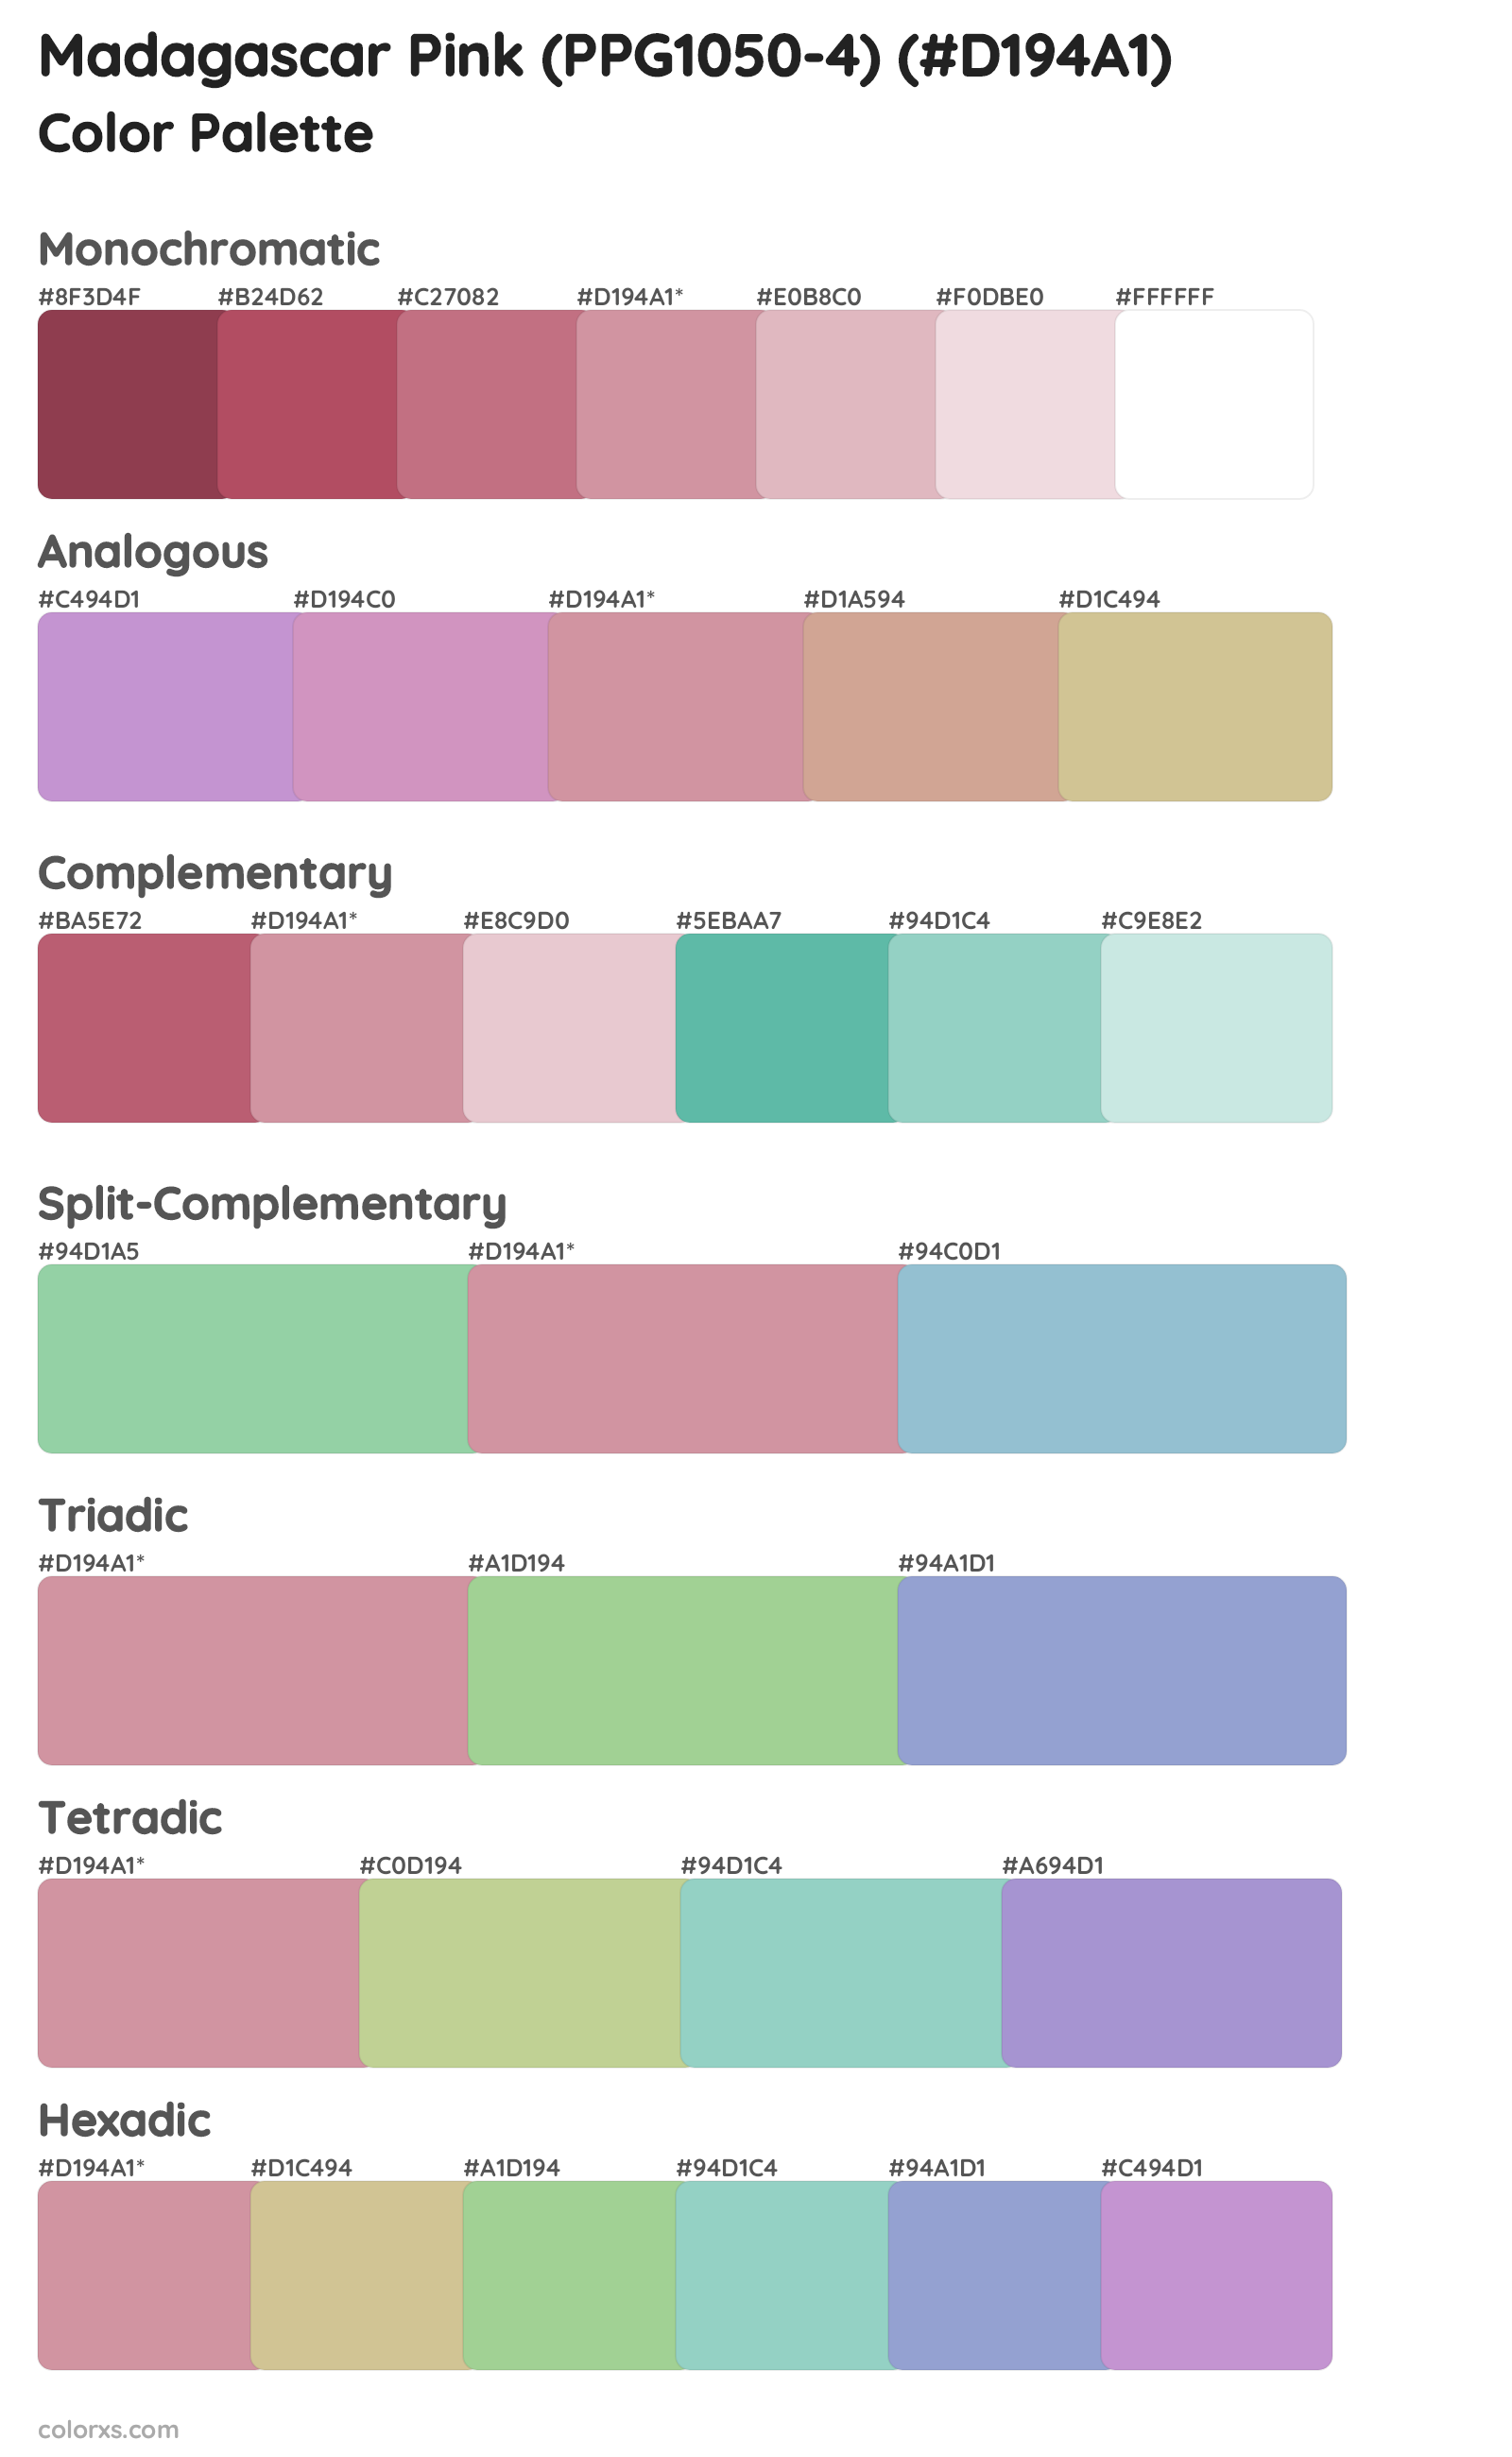 Madagascar Pink (PPG1050-4) Color Scheme Palettes